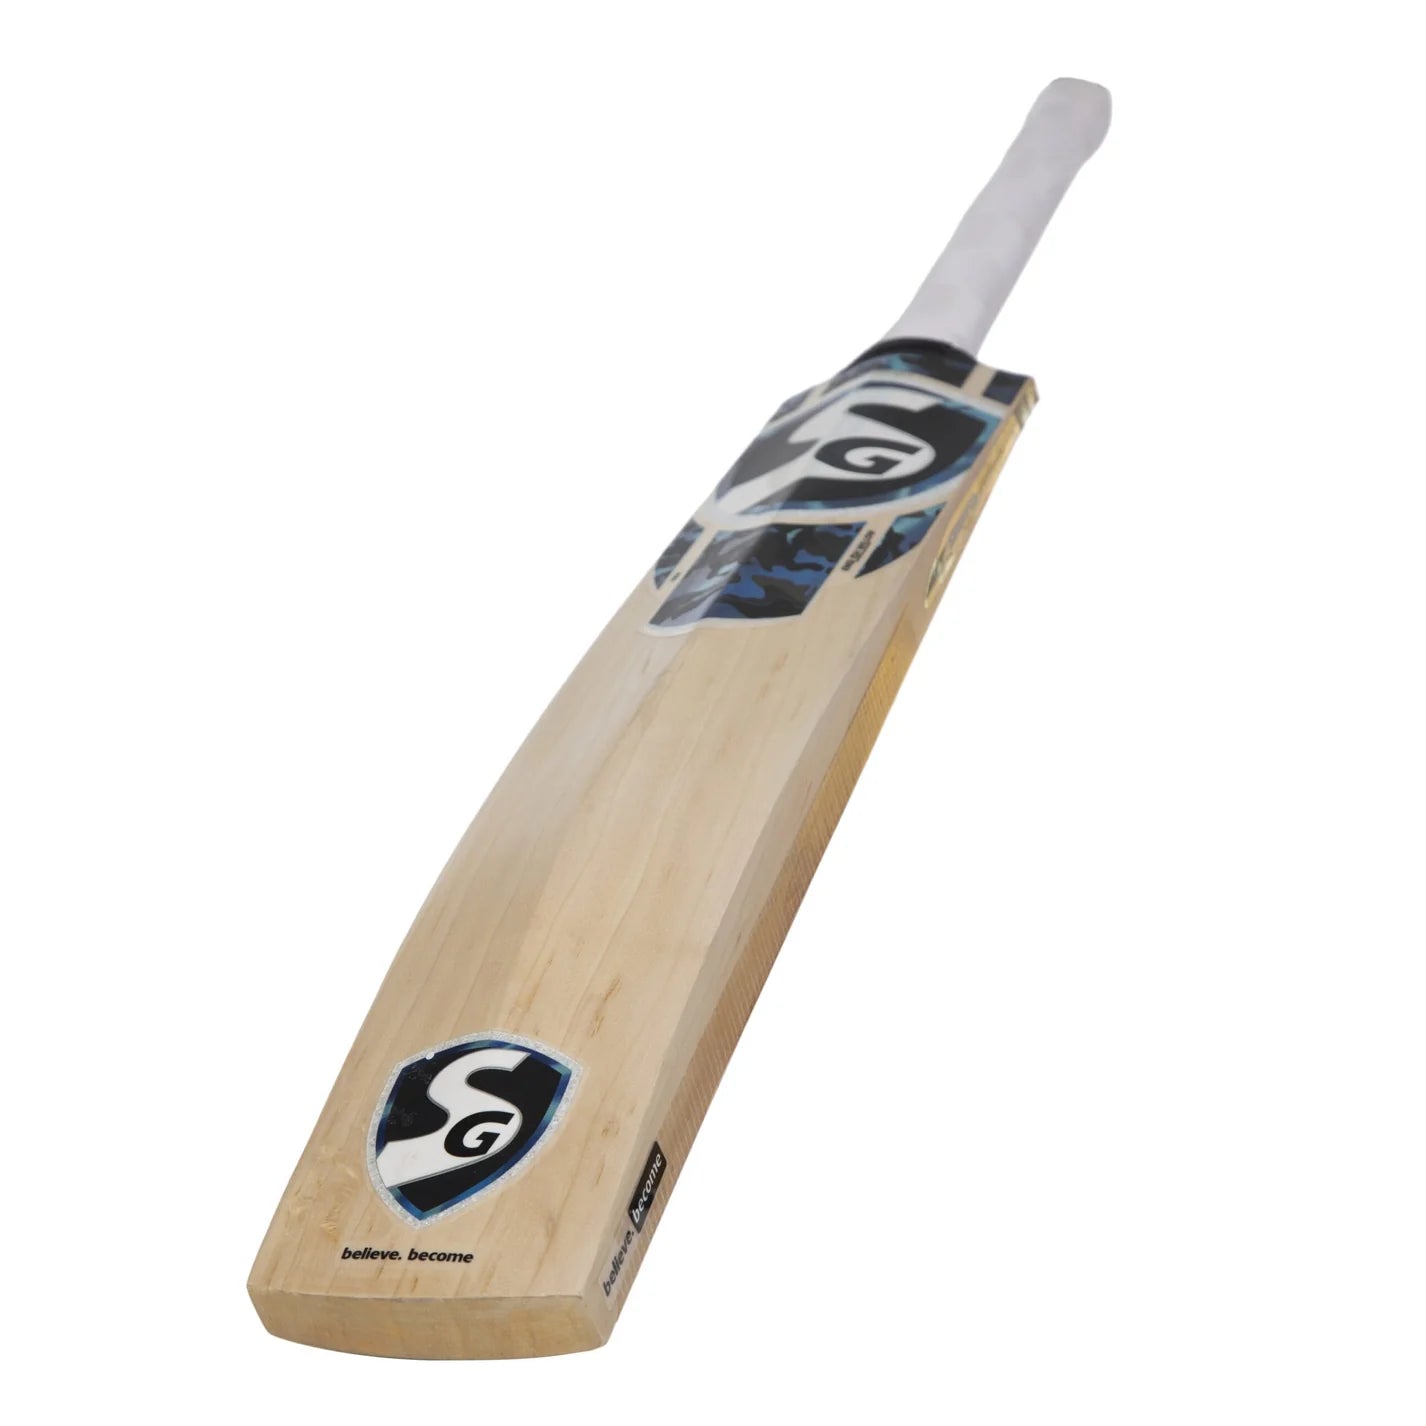 SG RP Xtreme Grade 5 world’s finest English Willow Cricket Bat